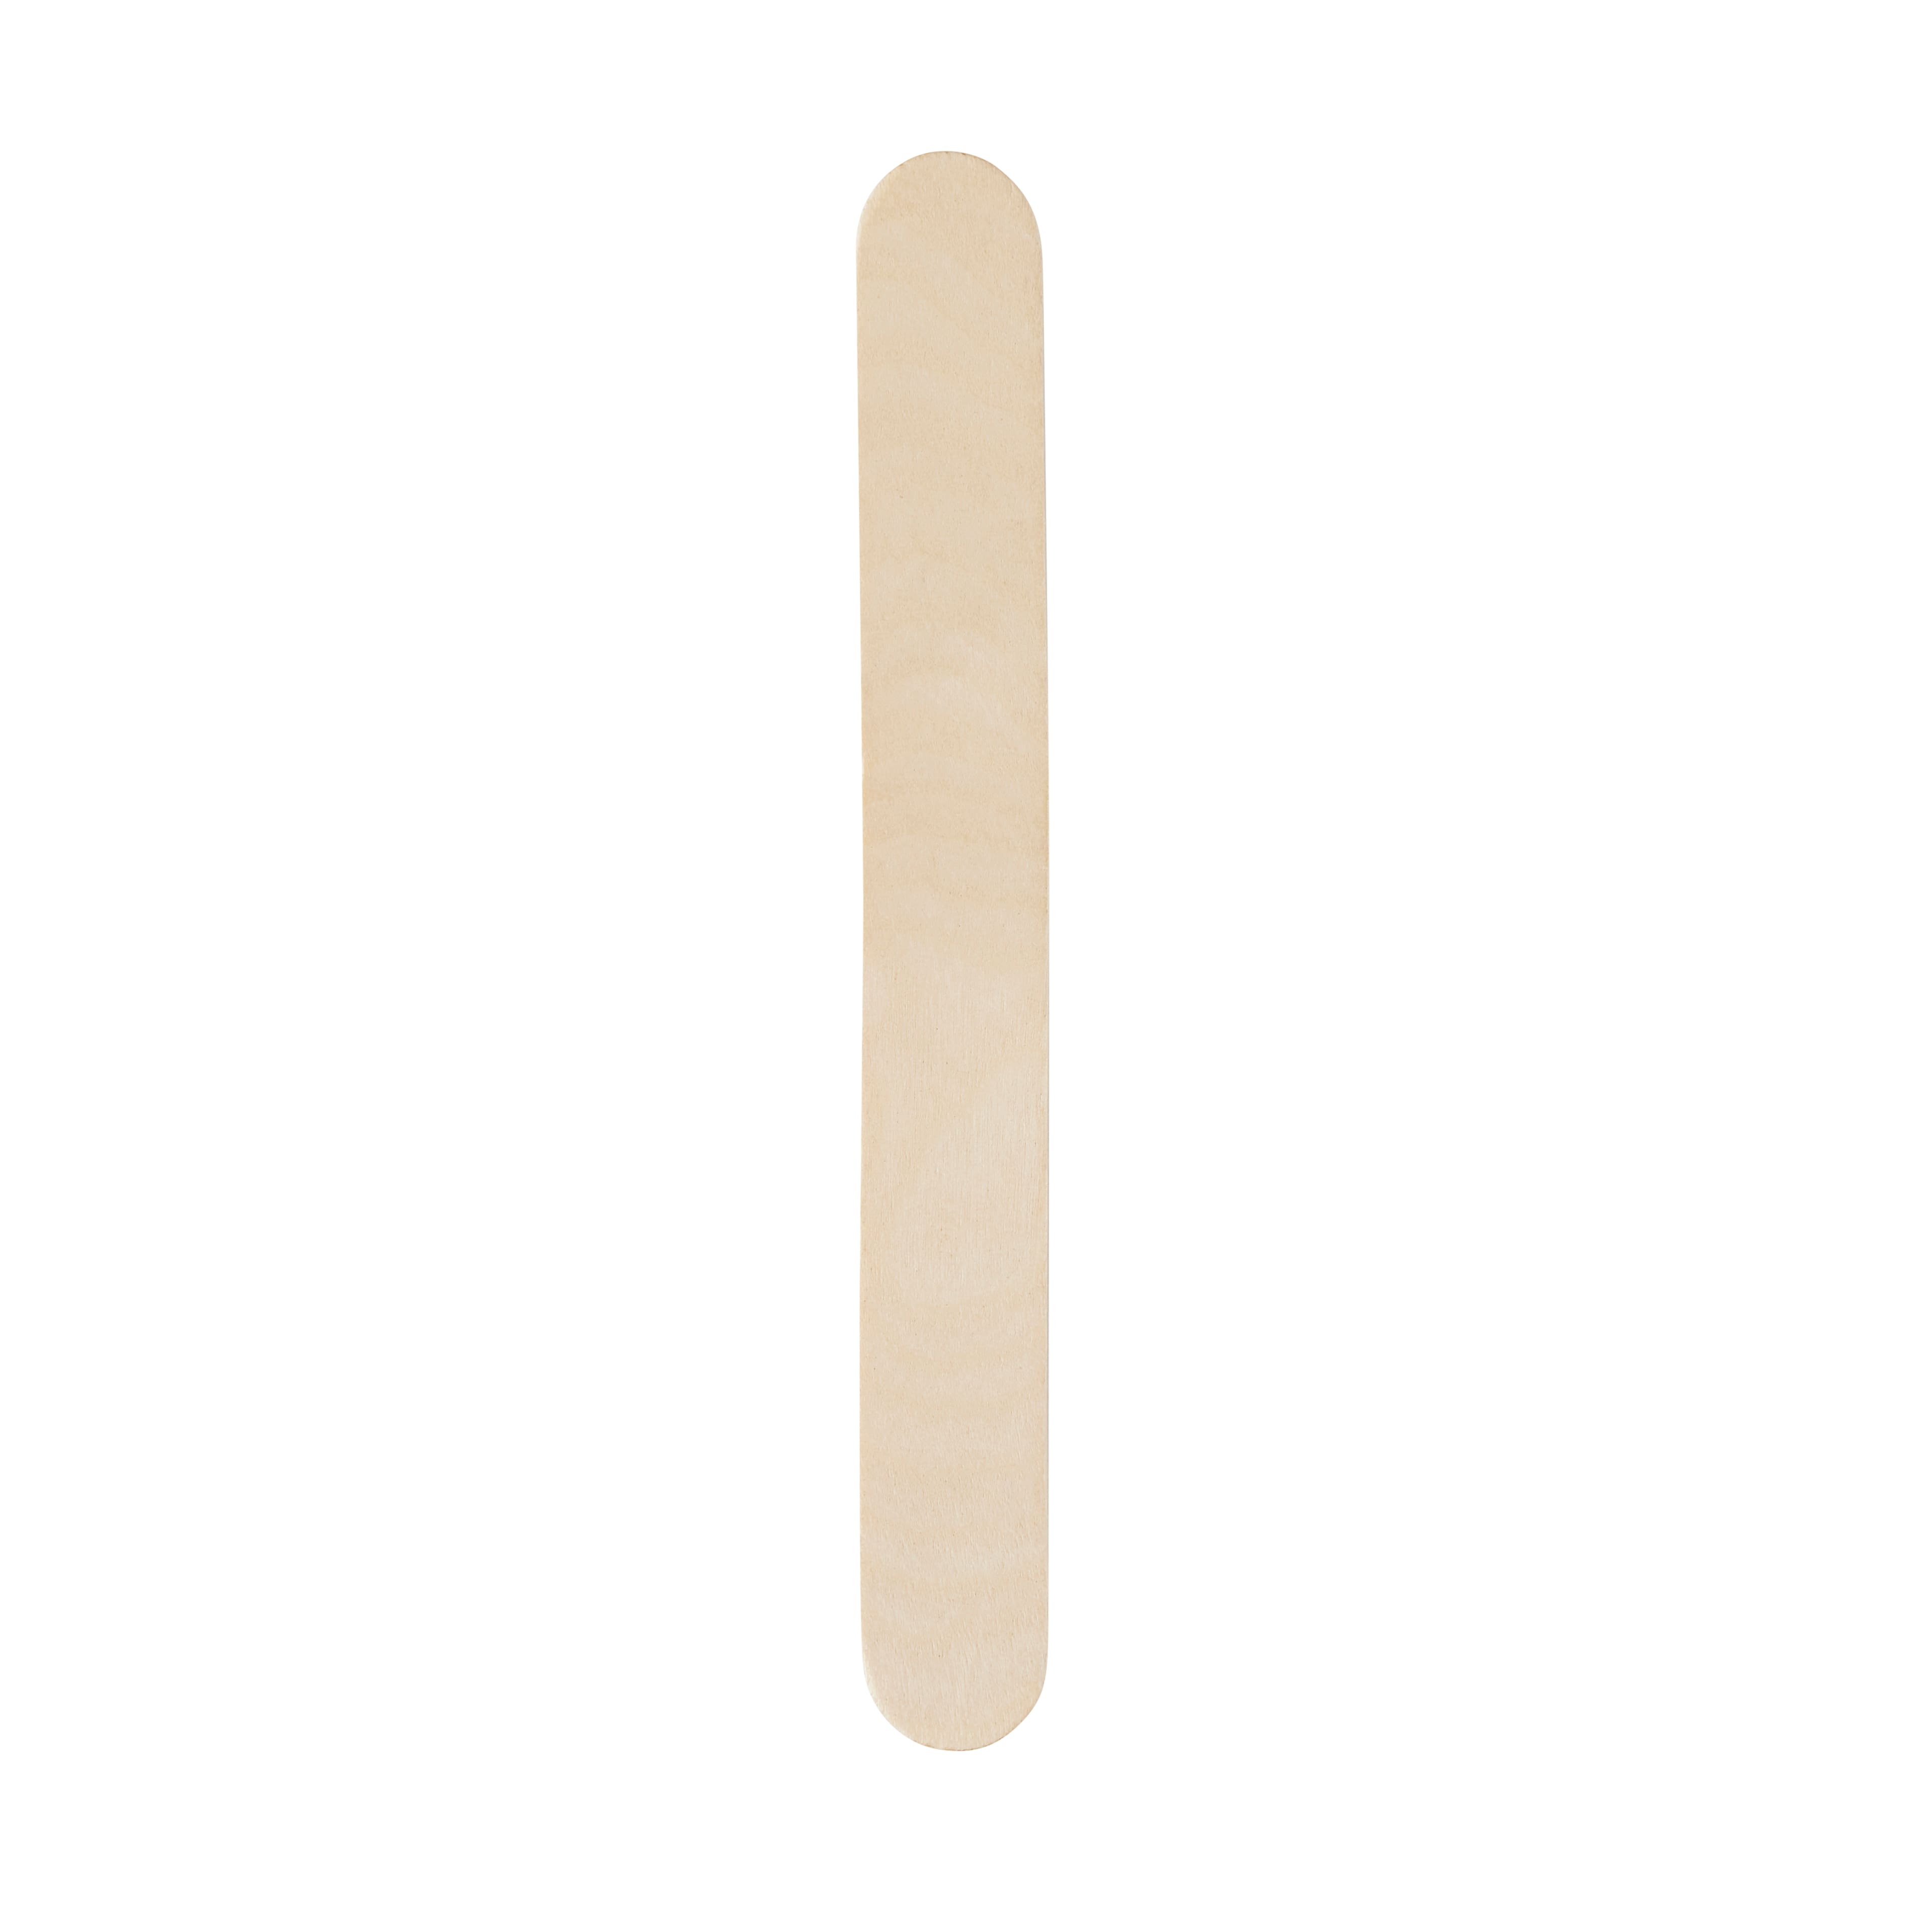 NextClimb Craft Popsicle Sticks - 10-Inch Jumbo Large Big Wide Wooden Paint Stir Sticks - Wood Epoxy Resin Slime Mixing Sticks (50 Pieces per Package)